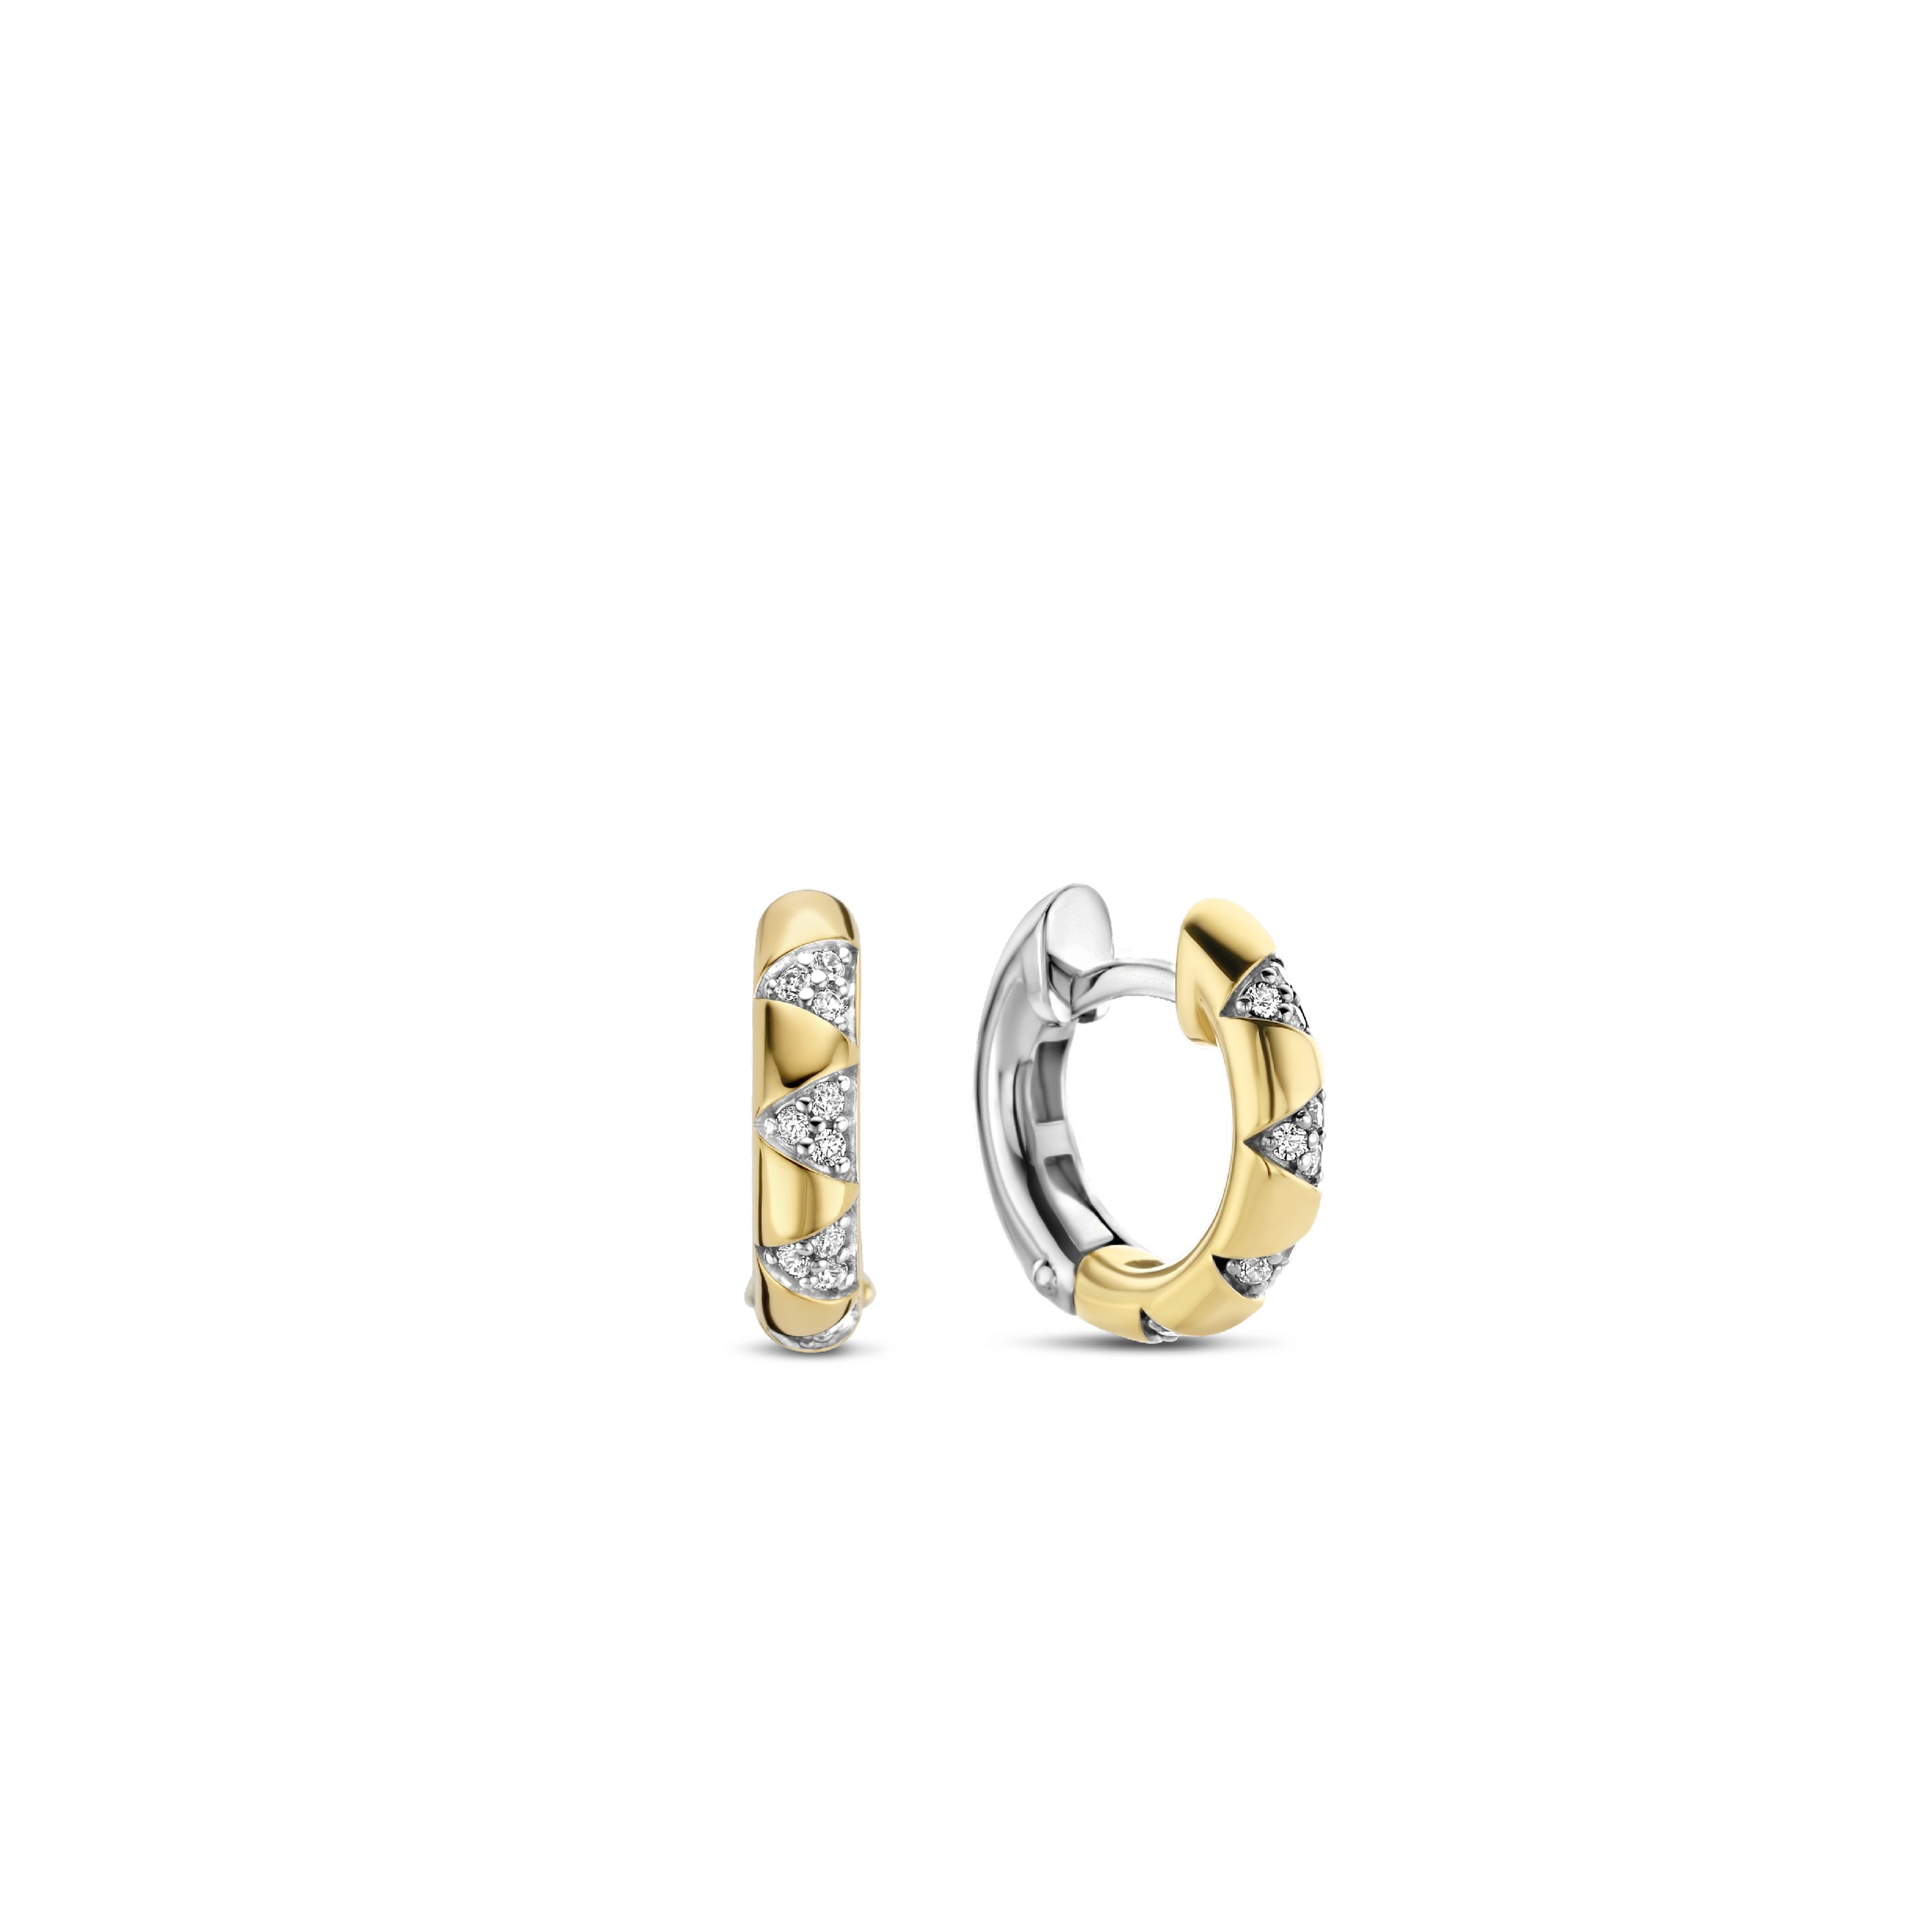 TI SENTO - Milano Earrings 7838ZY Gala Jewelers Inc. White Oak, PA